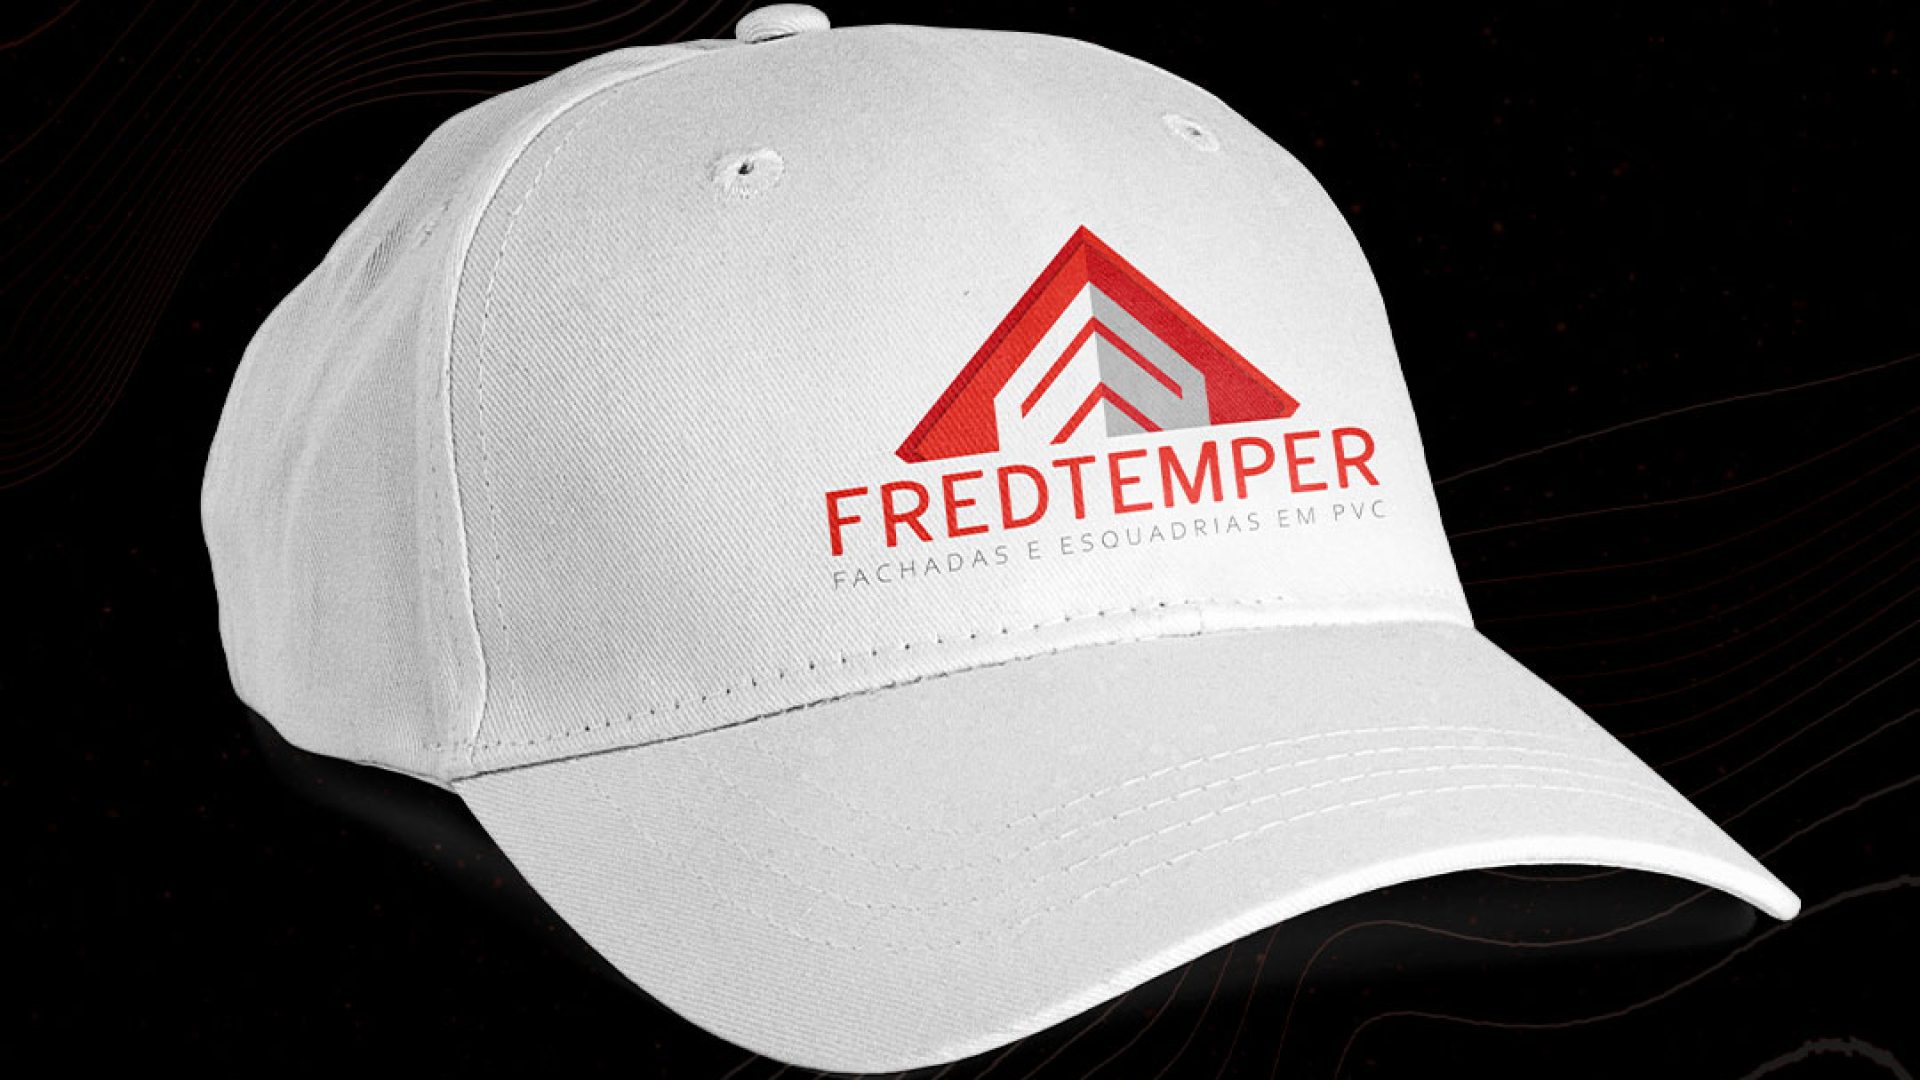 Fredtemper – 05